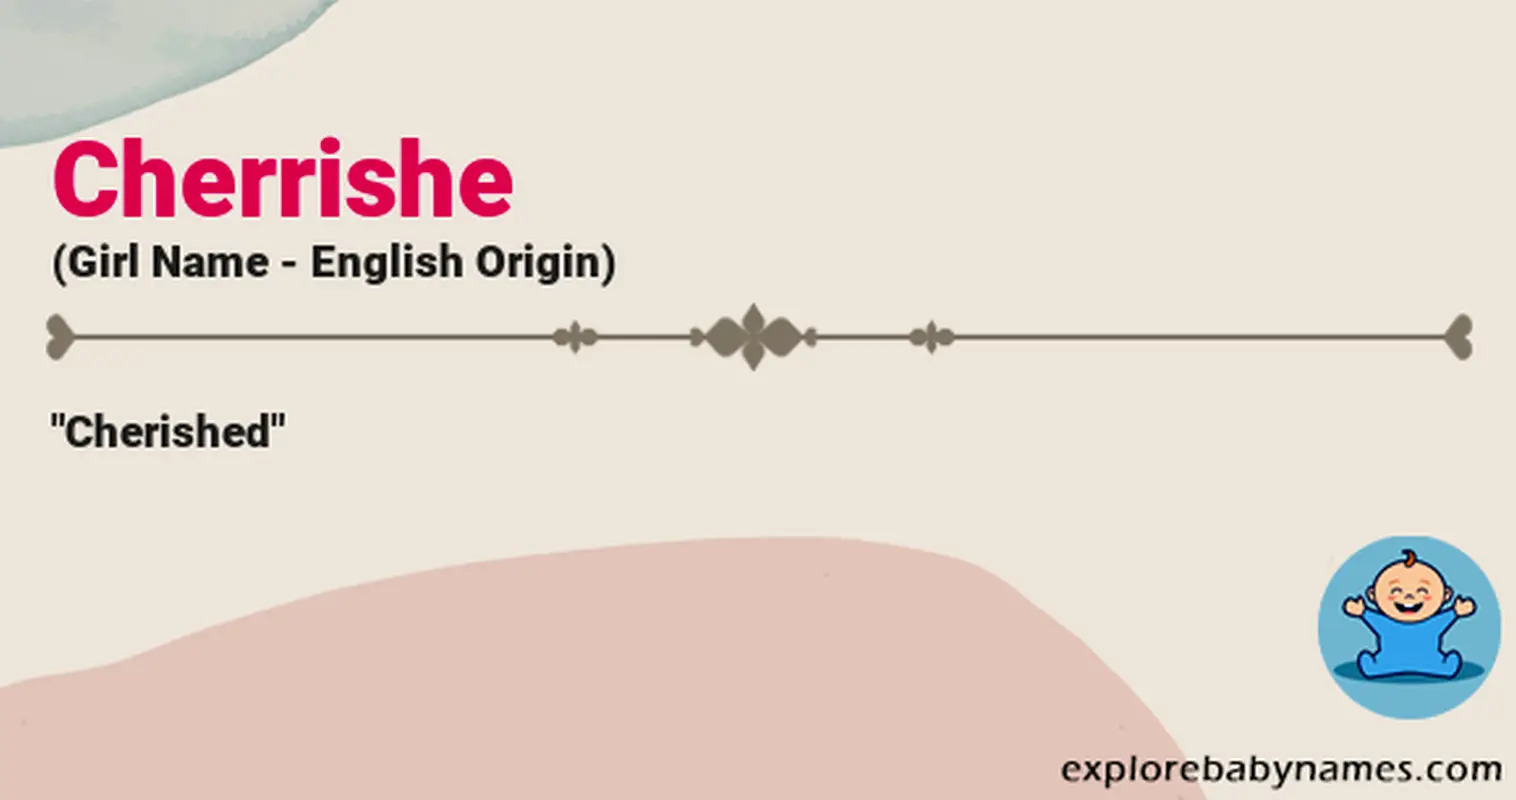 Meaning of Cherrishe